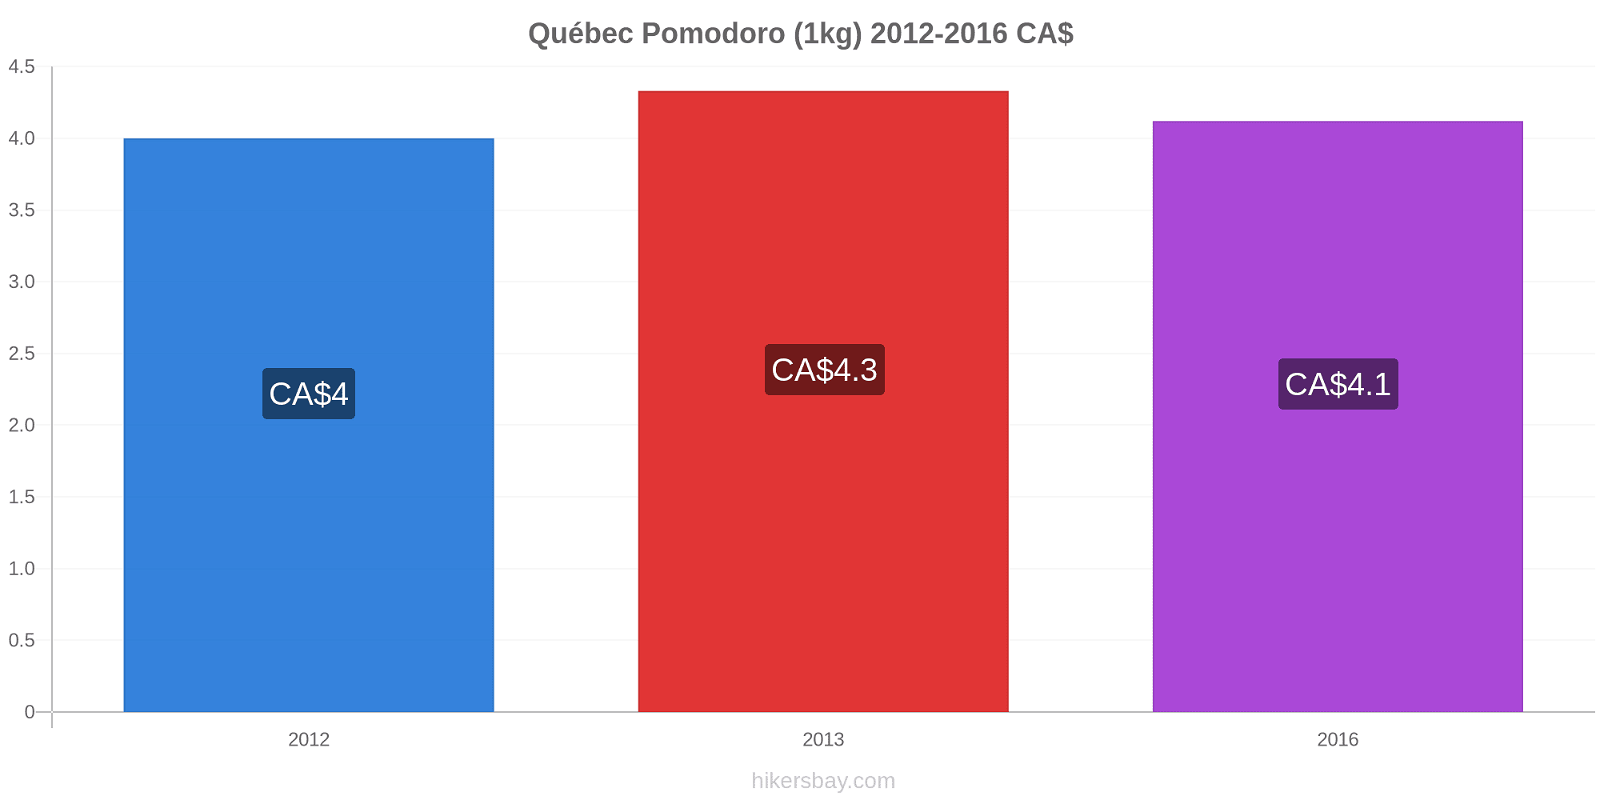 Québec variazioni di prezzo Pomodoro (1kg) hikersbay.com